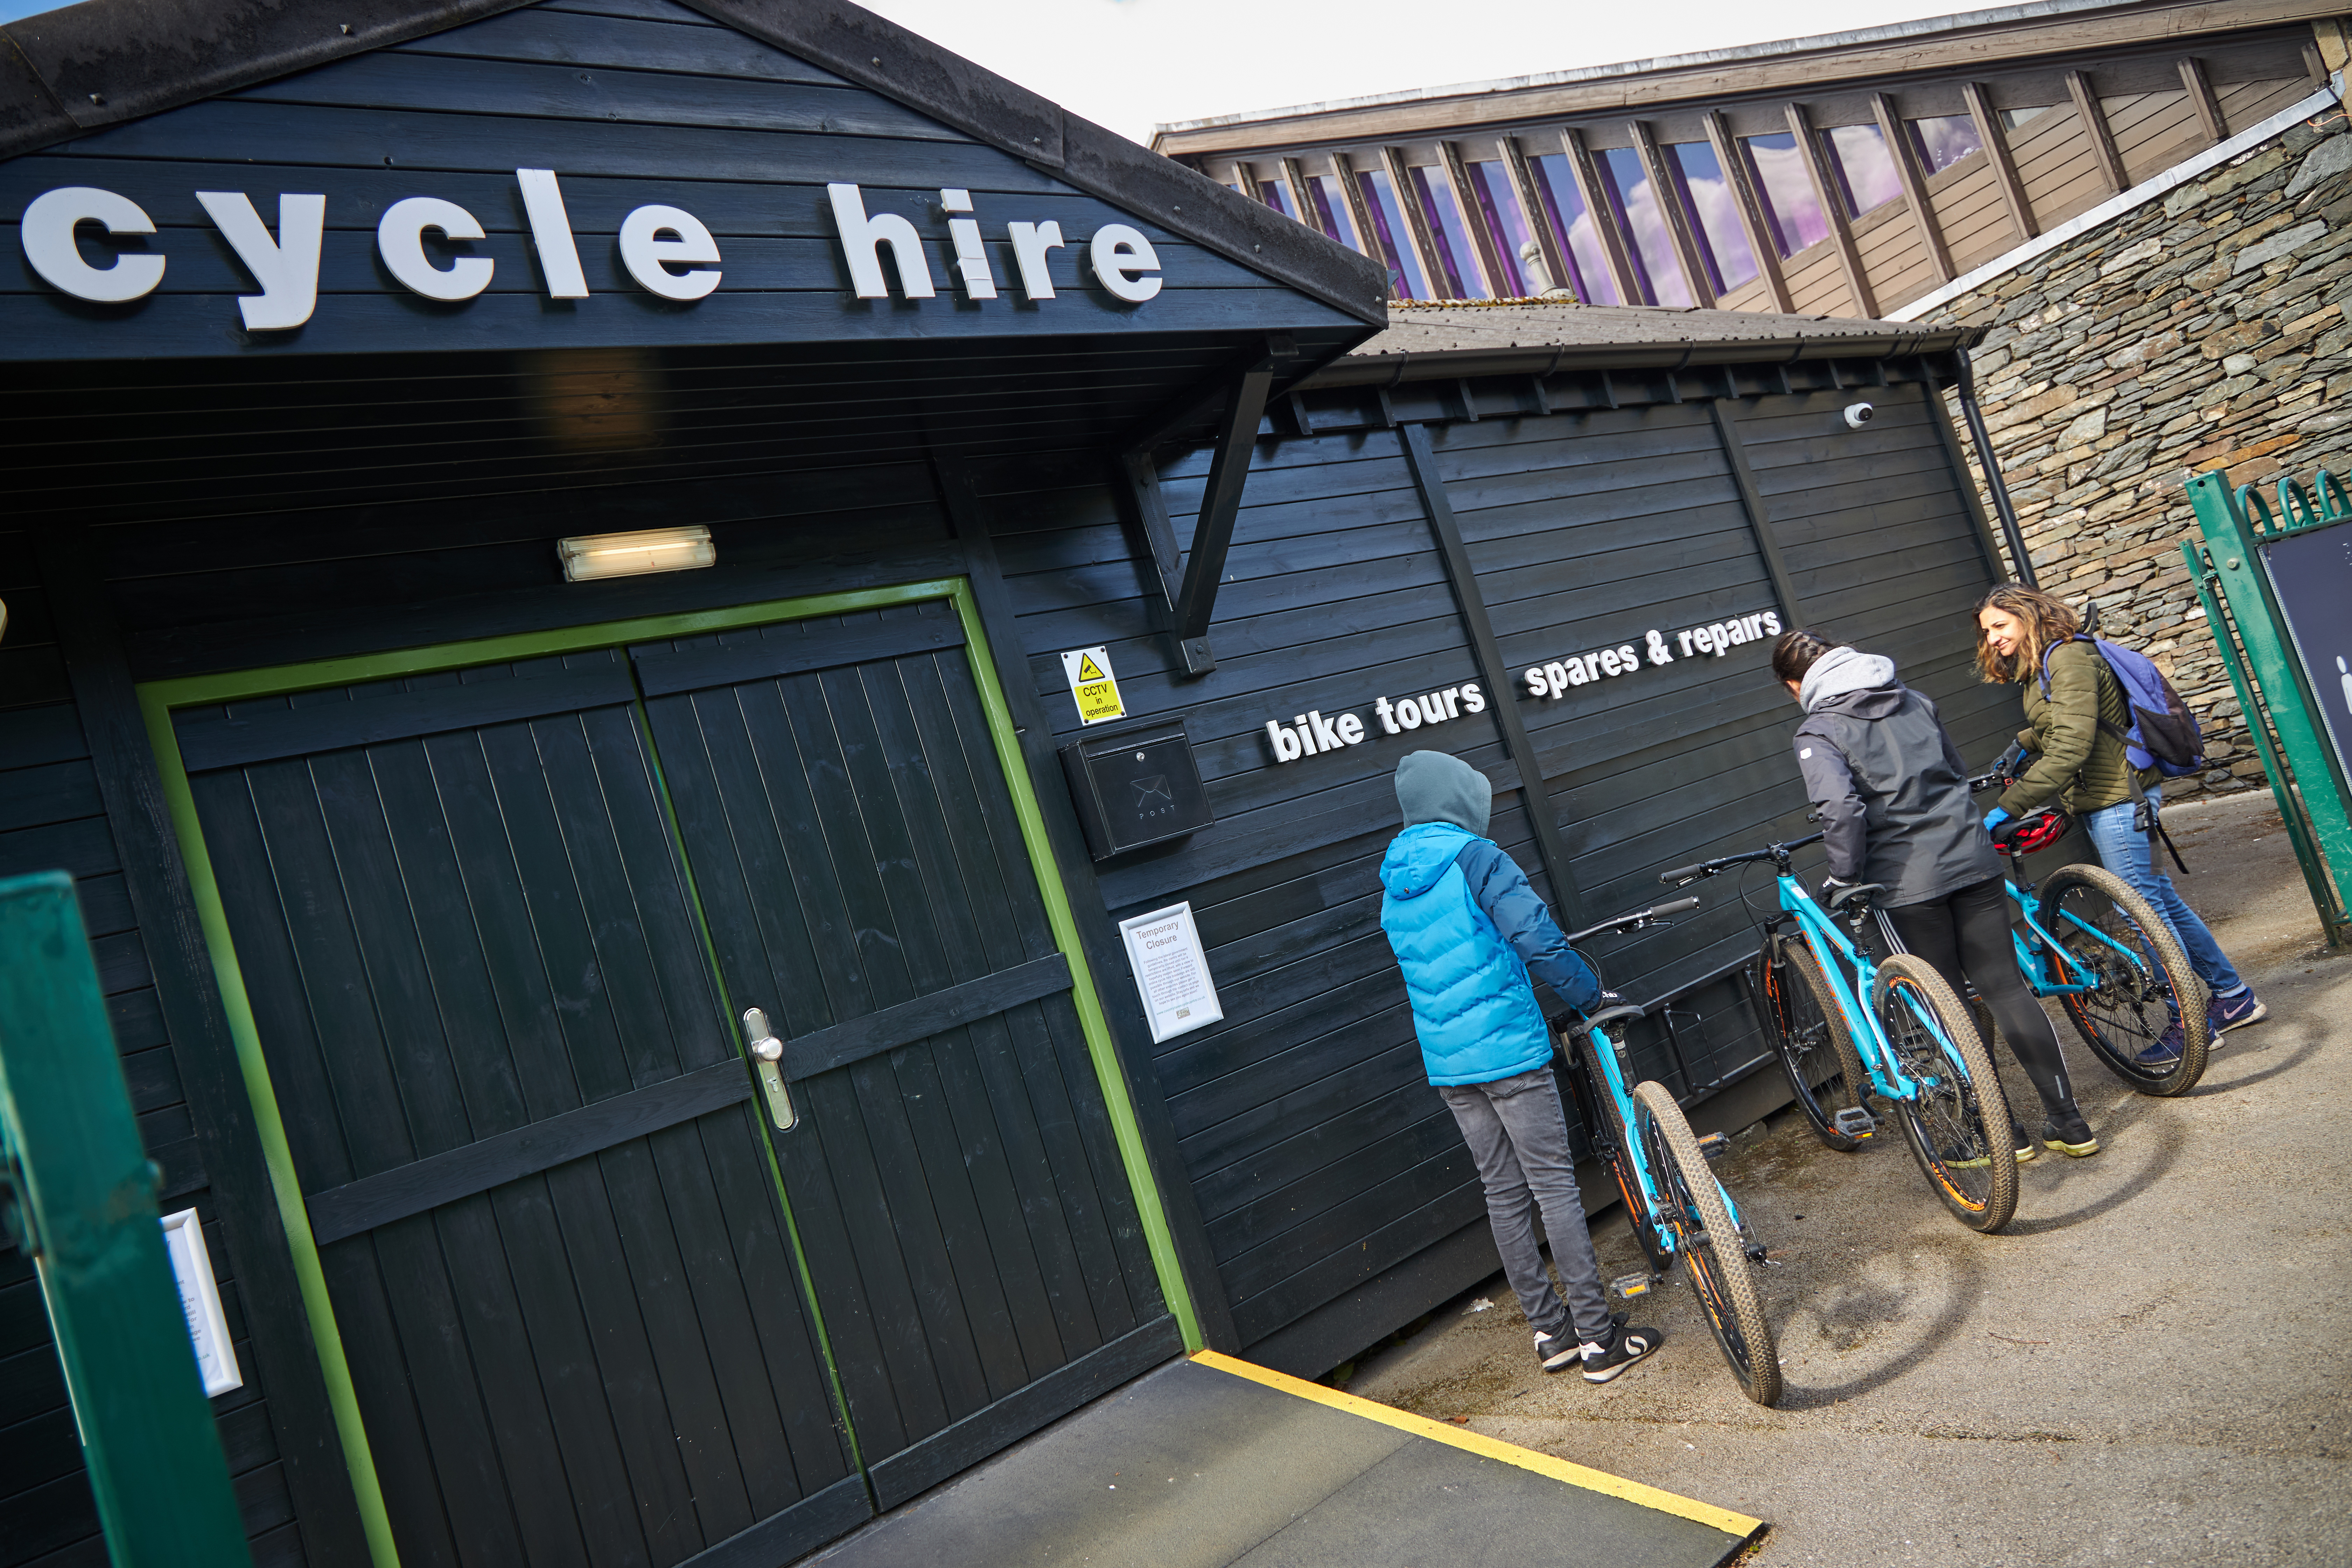 Bike hire centre - Adrian Naik